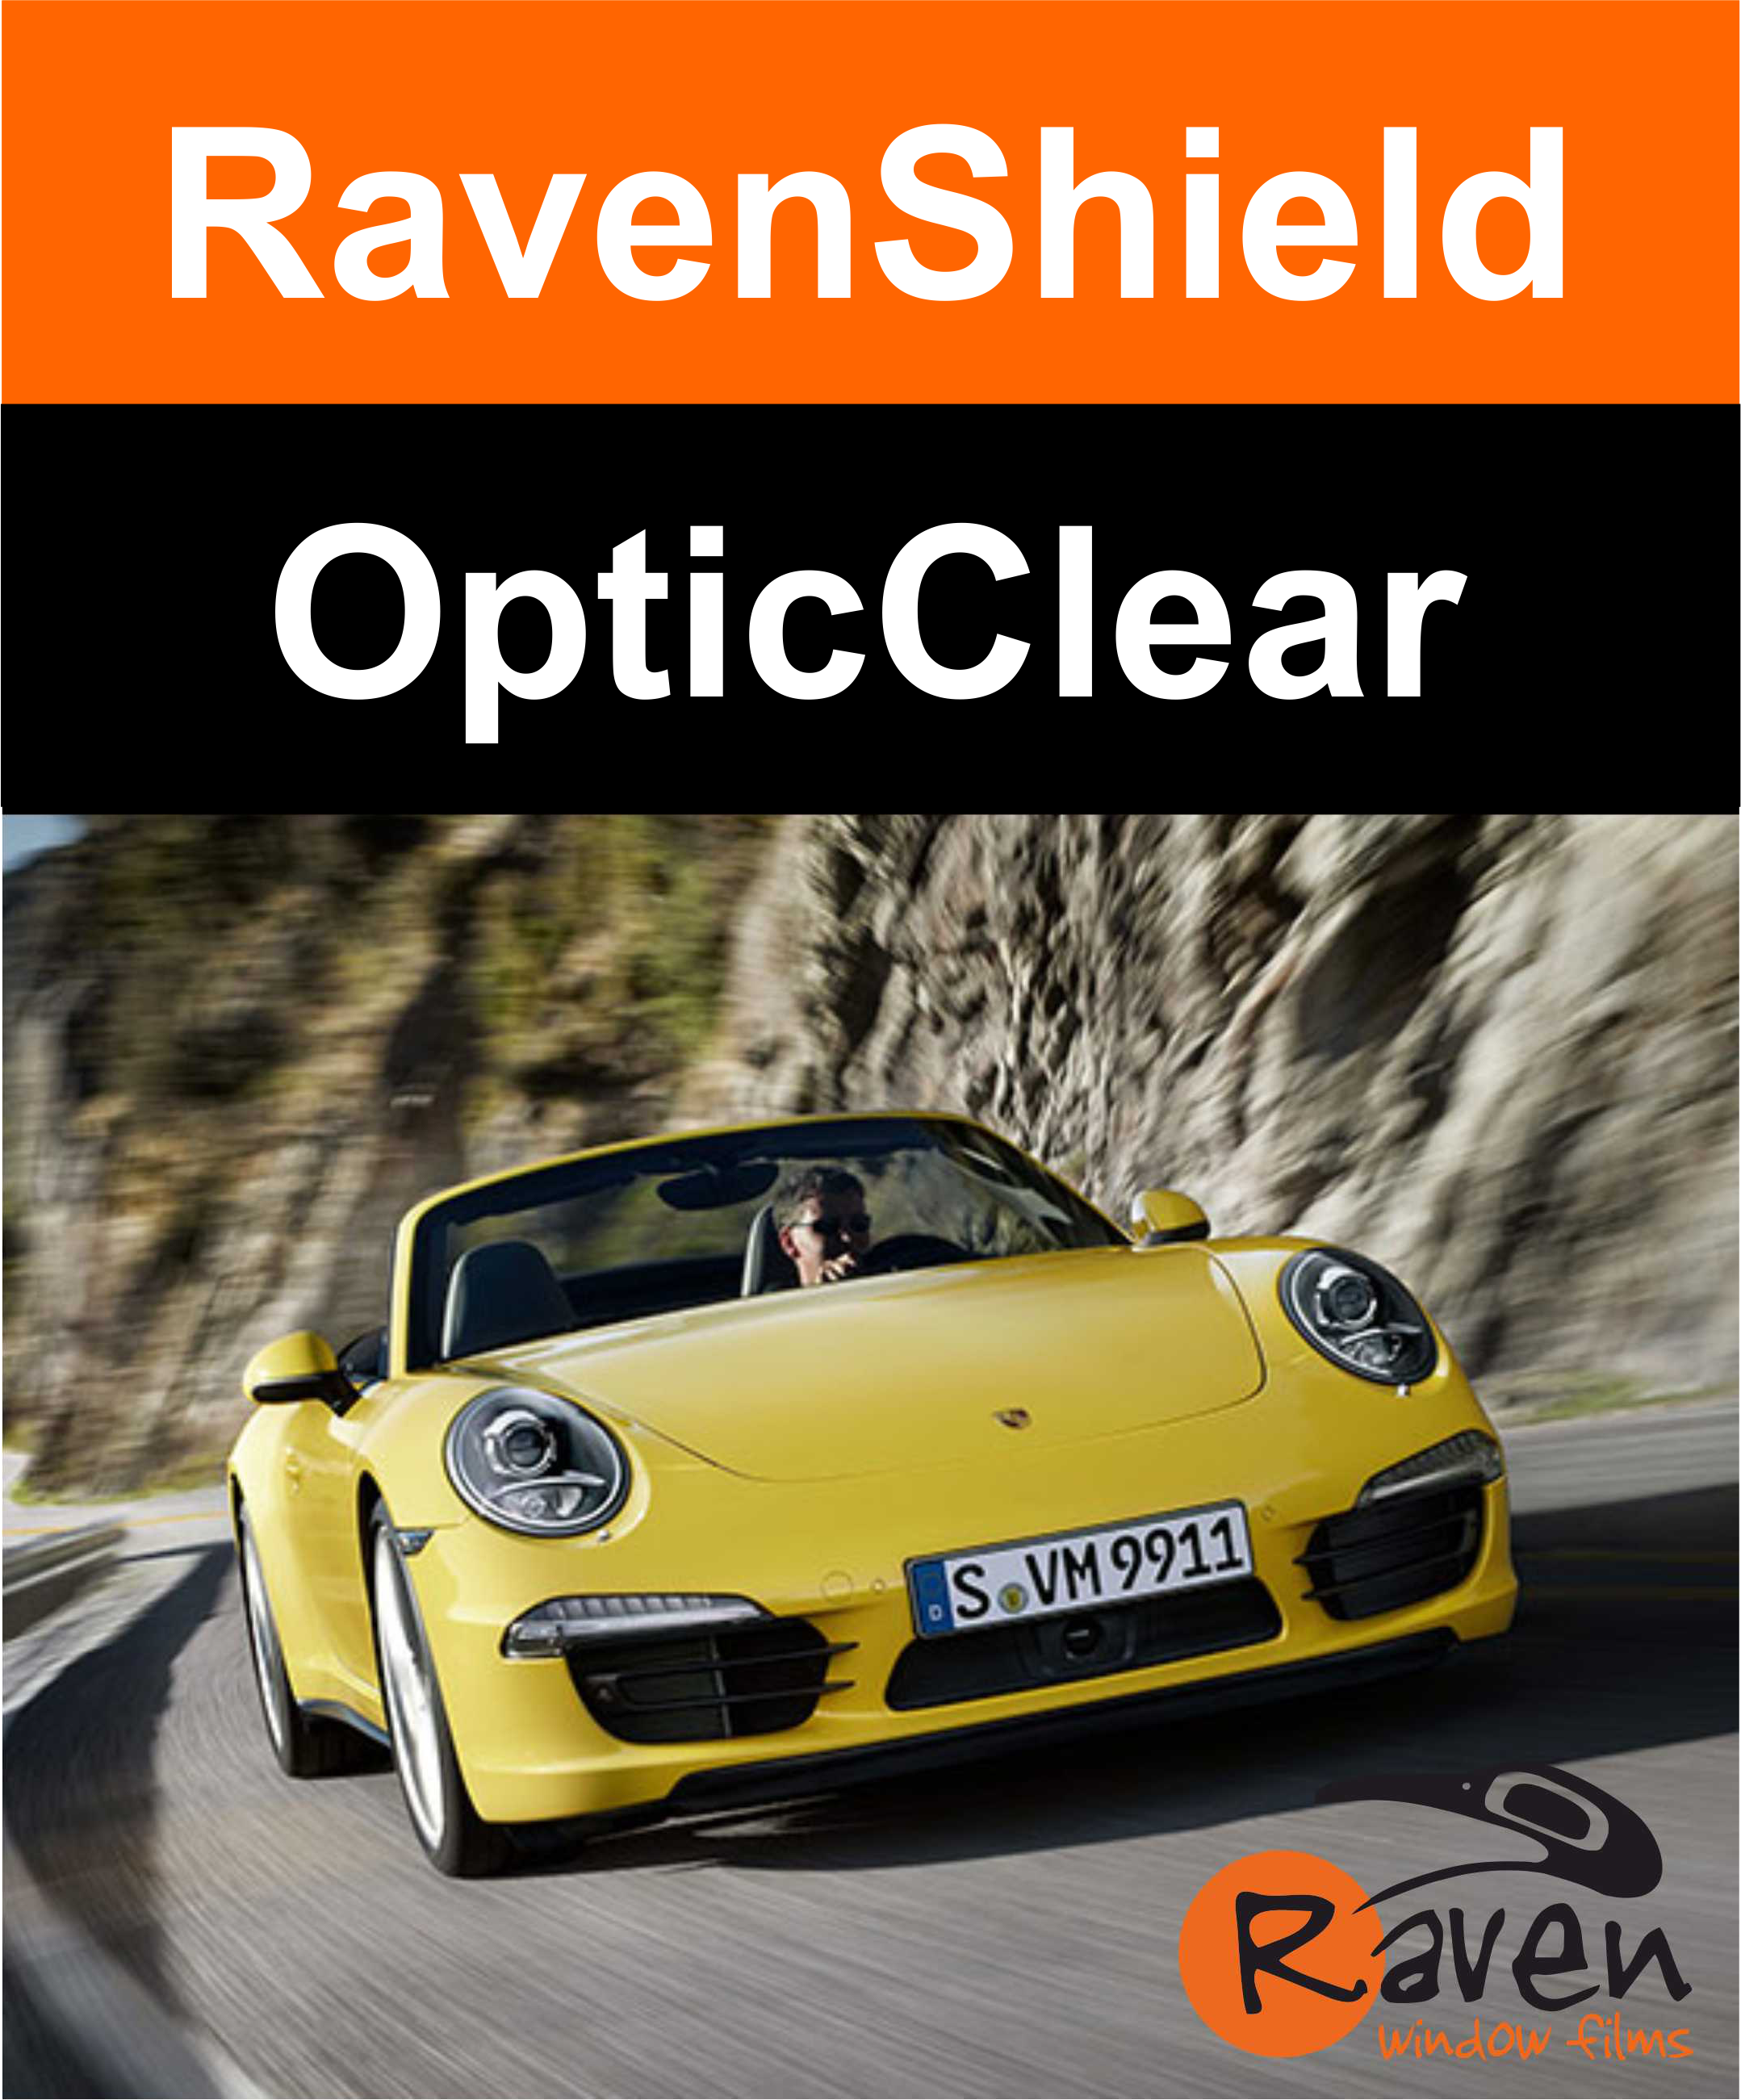 RavenShield OpticClear 